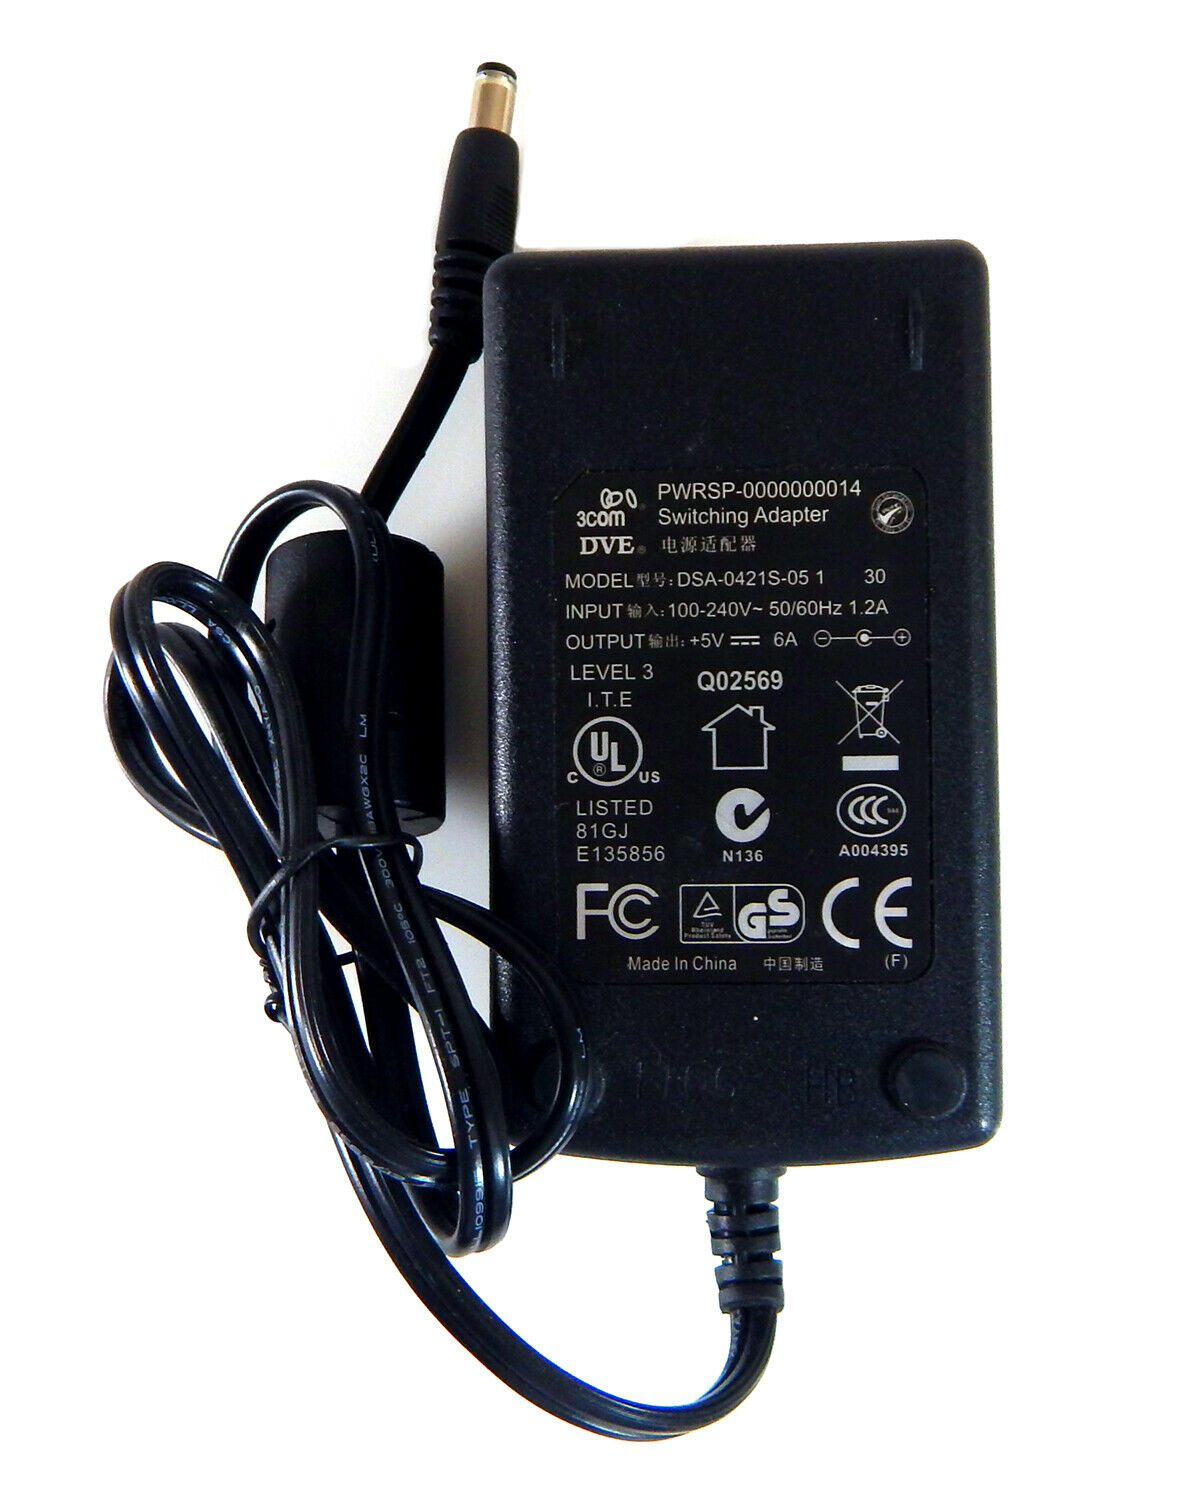 DVE 3COM 5VDC 6A Switching AC Adapter New DSA-0421S-05 PWRSP-000014 MPN: DSA-0421S-05 Brand: 3Com UPC: 64581414679